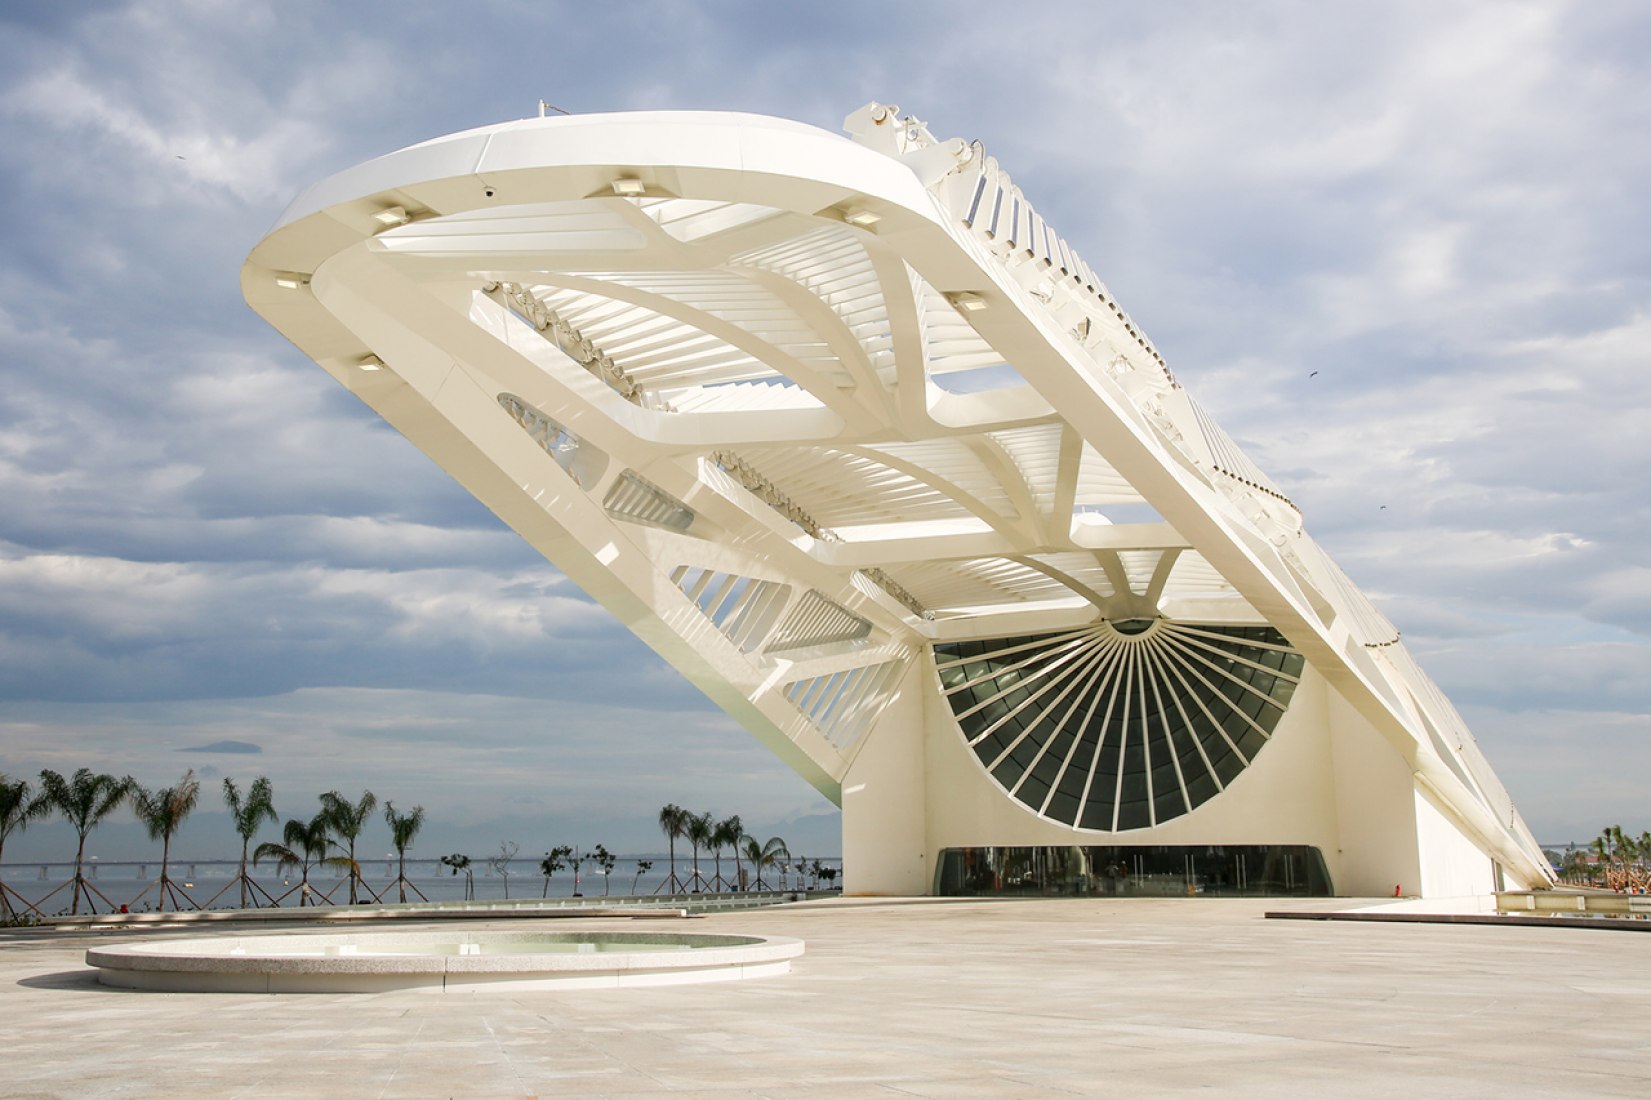 Museu do Amanhã by Santiago Calatrava. Photograph @ Bernard Miranda Lessa.